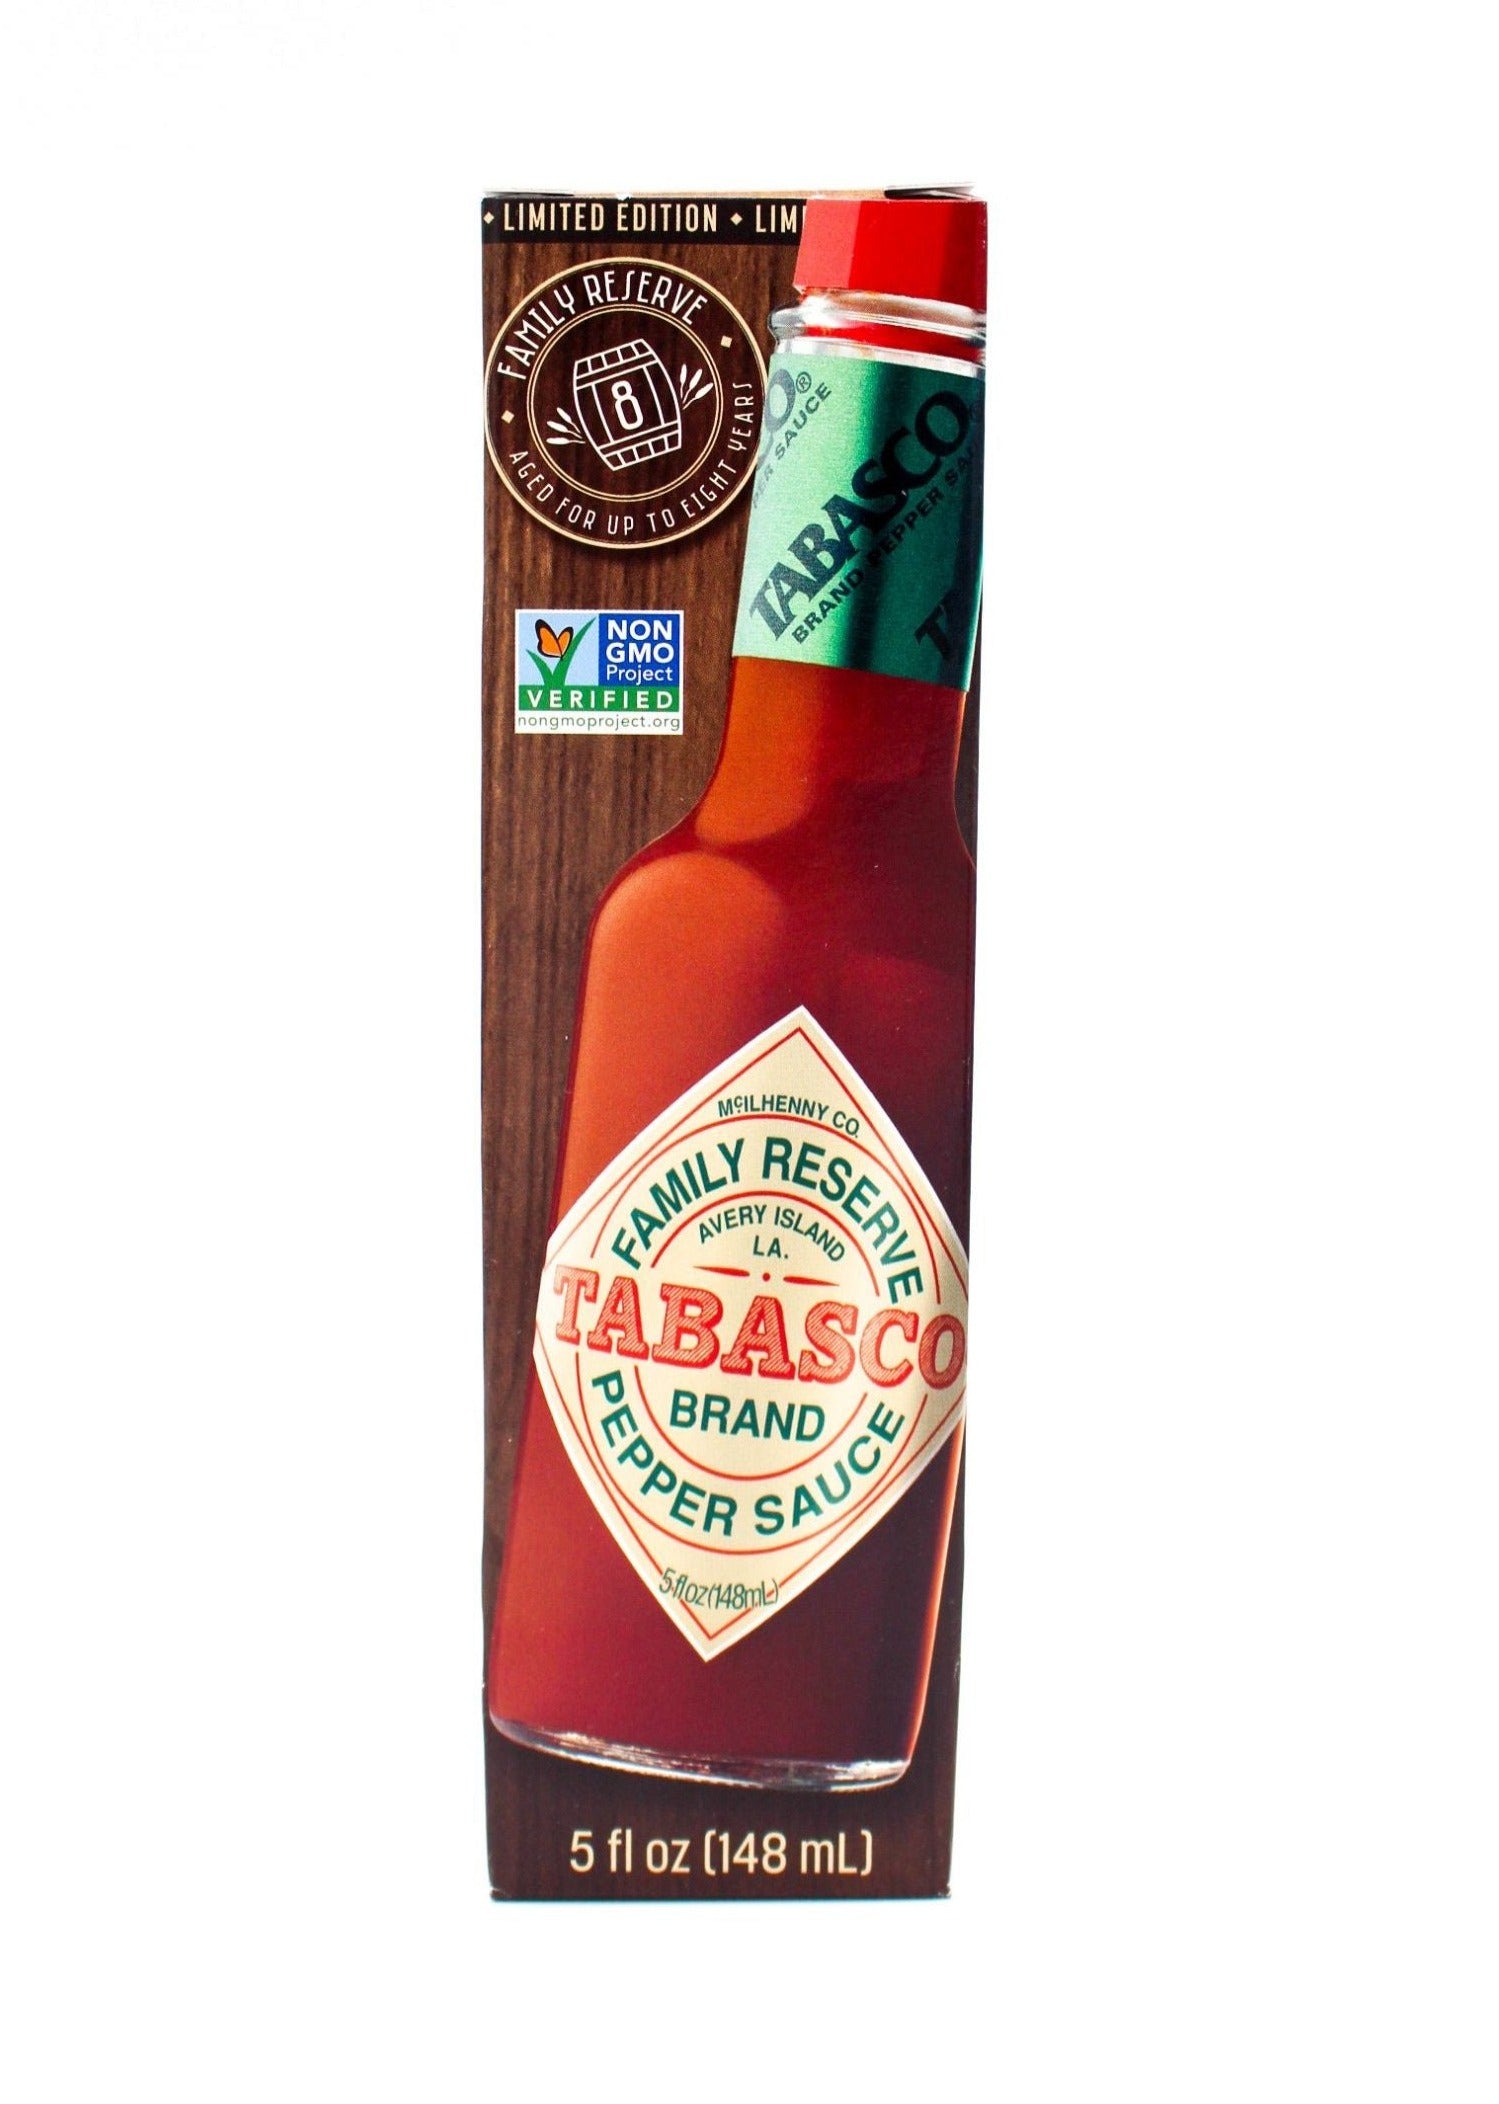 Mini Tabasco Original Pepper Sauce Bottle Real Glass bottle 1/8 oz.  Louisiana